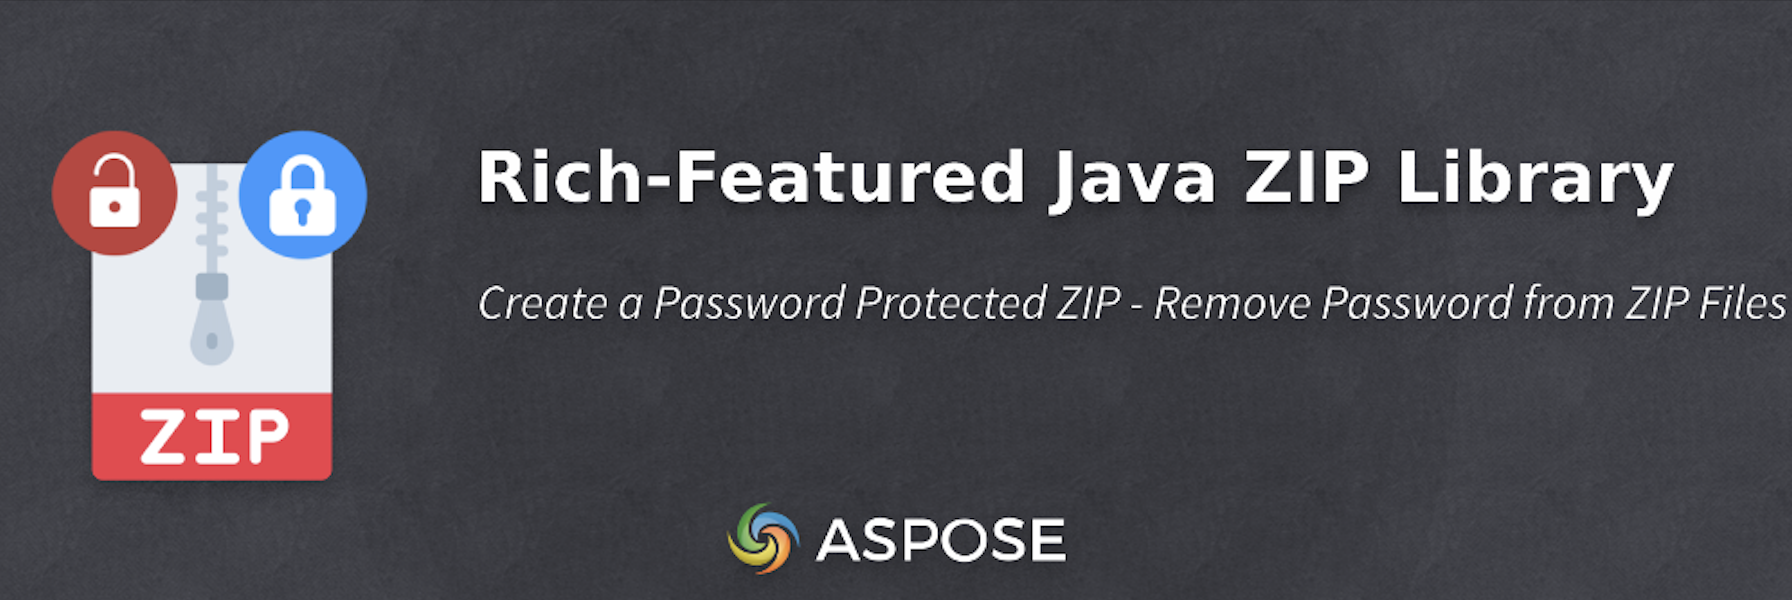 Create a Password Protected ZIP using Java ZIP API